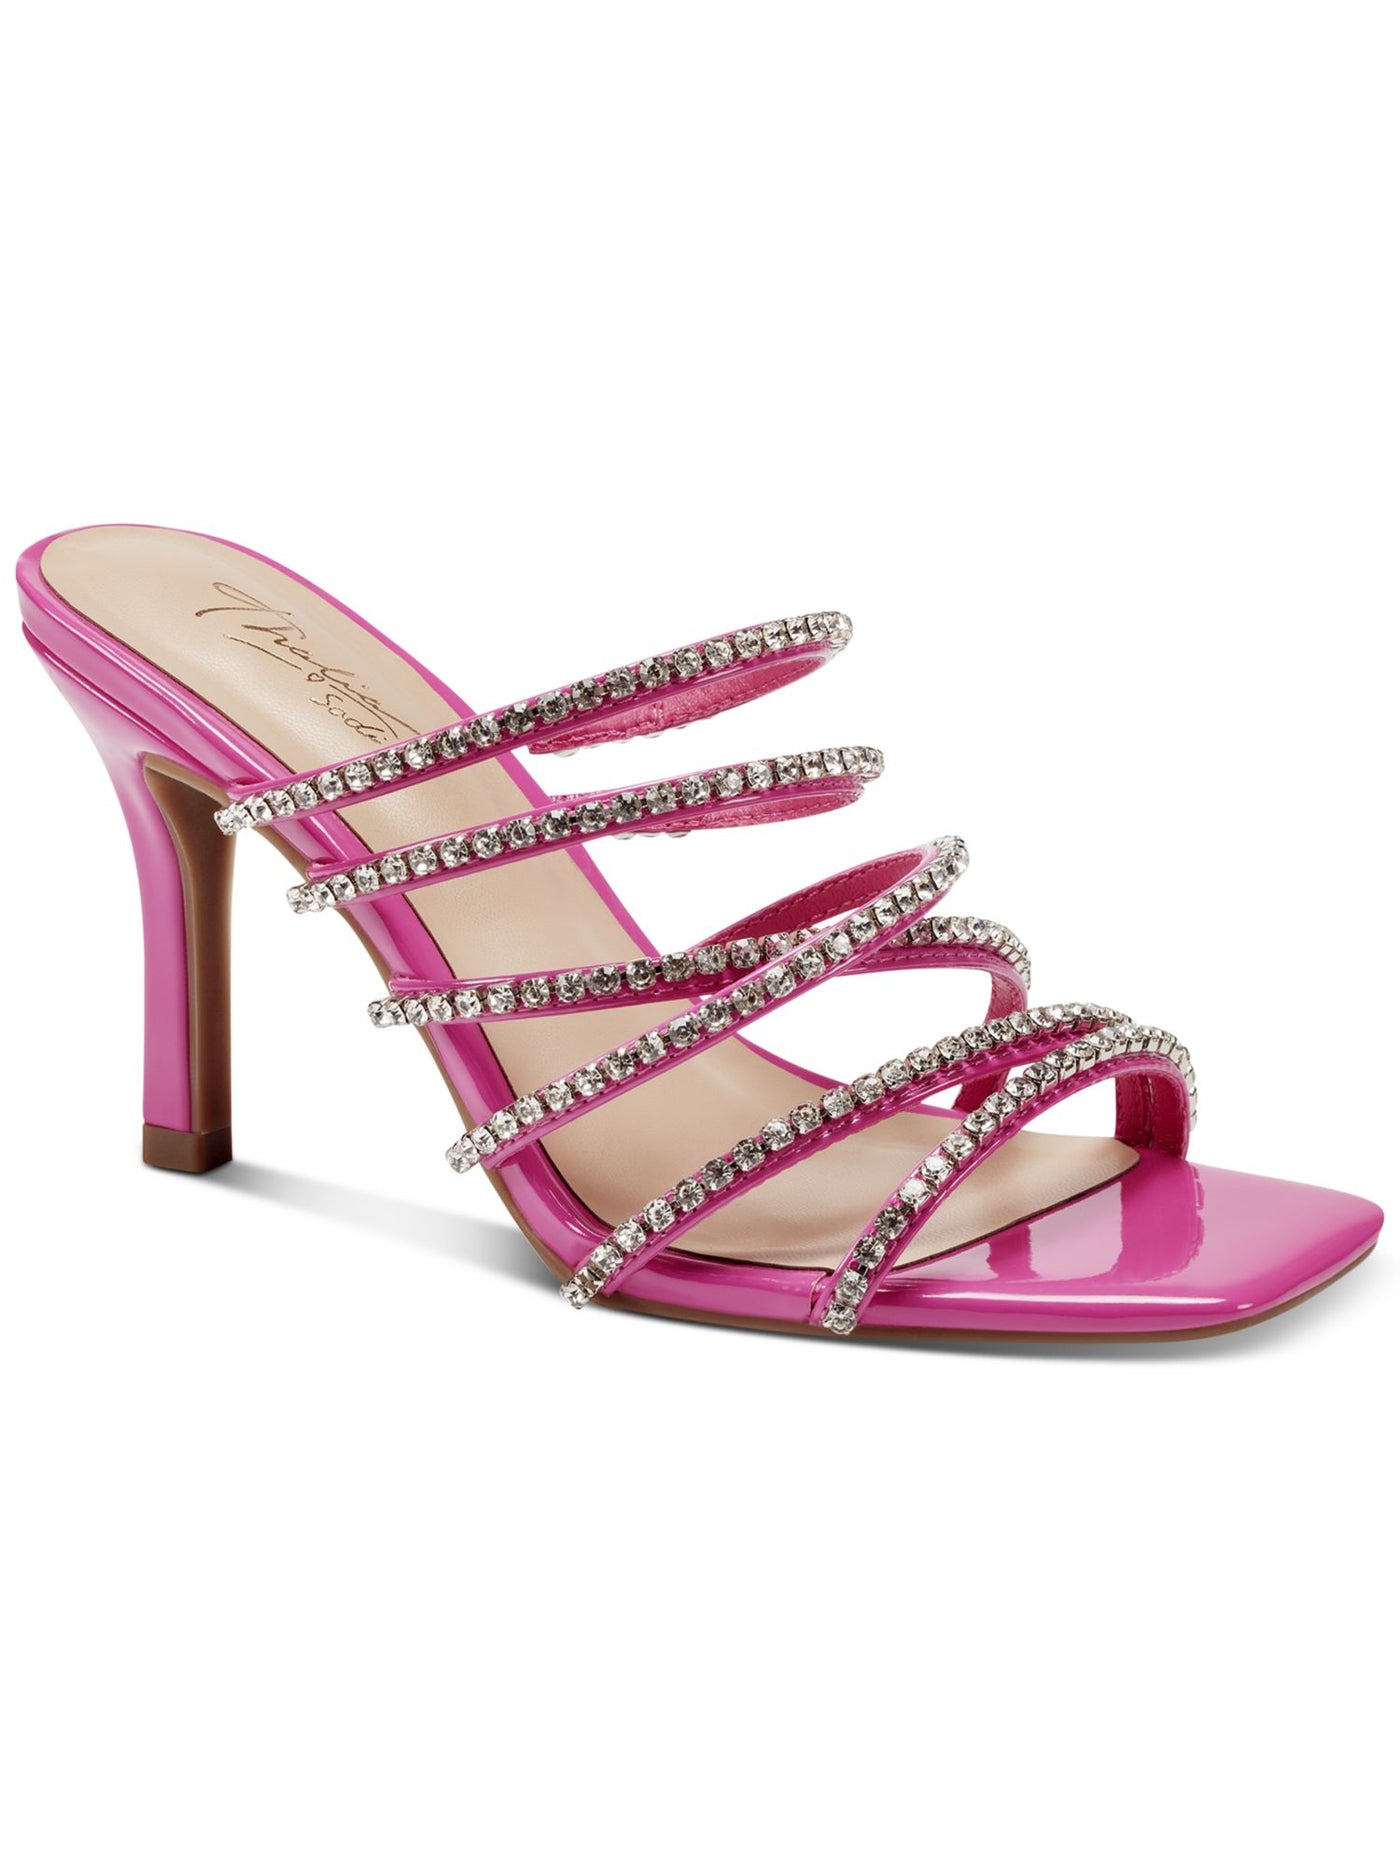 THALIA SODI Womens Pink Goring Padded Embellished Strappy Dahlia Square Toe Stiletto Slip On Dress Heeled Sandal 5.5 M